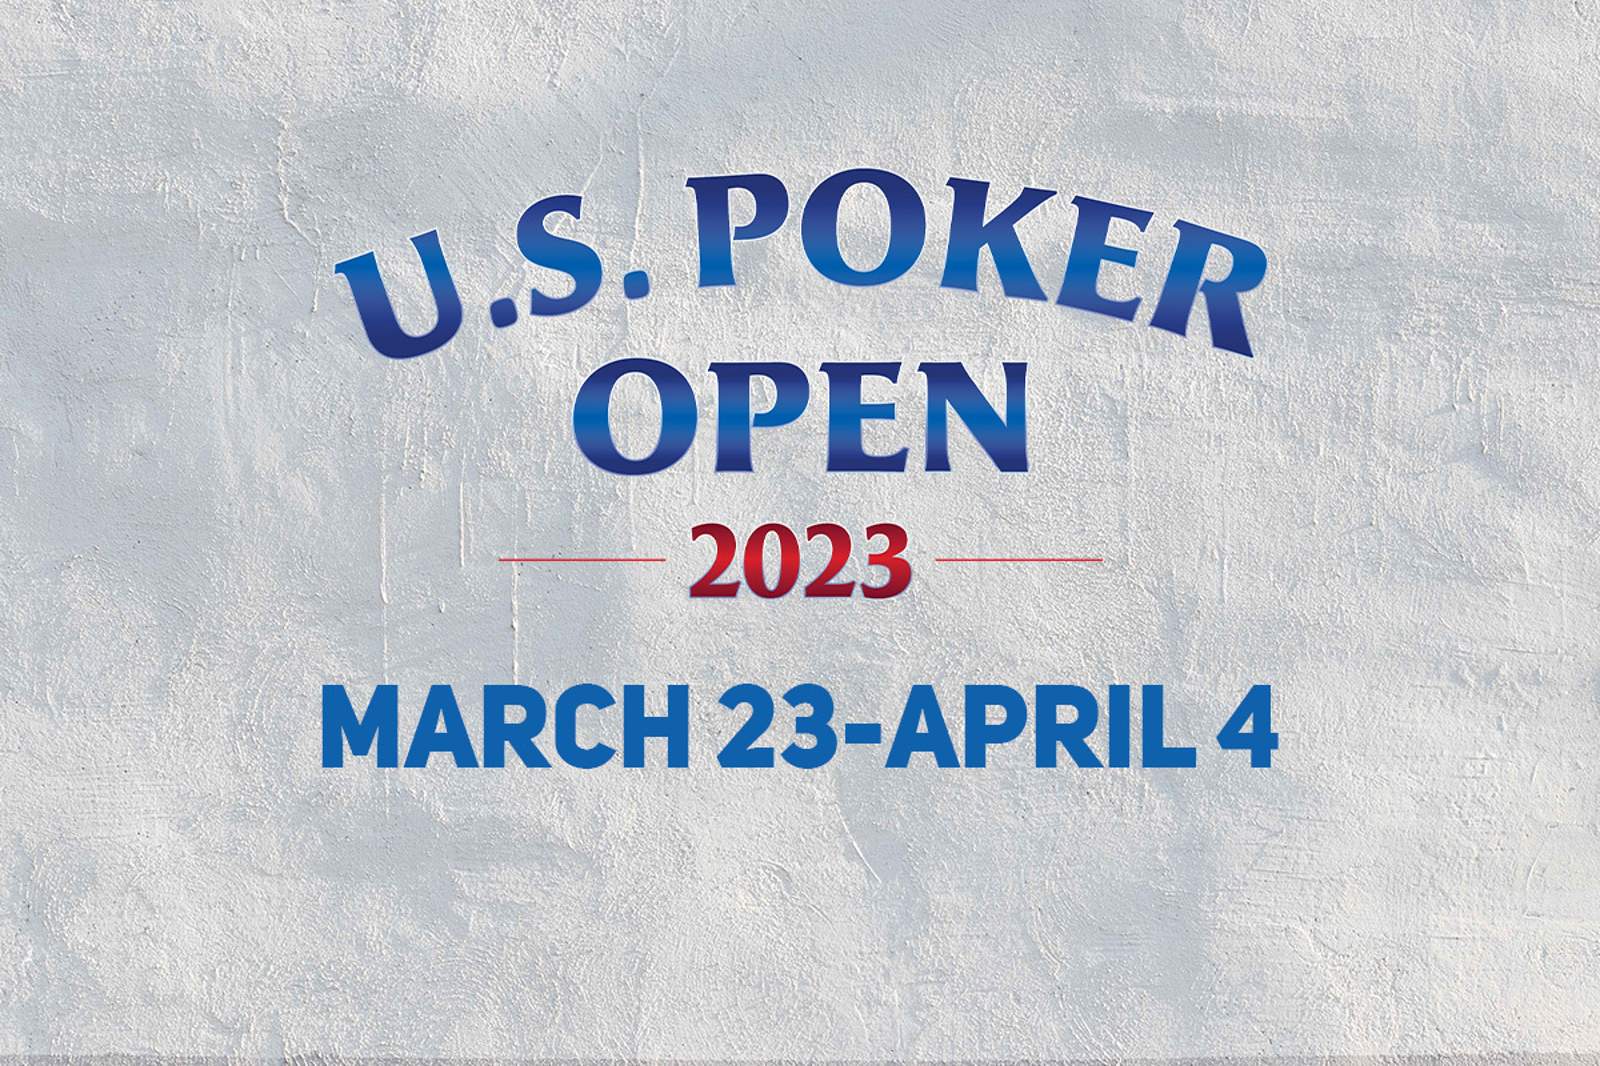 U.S. Poker Open Schedule: March 23 - April 4